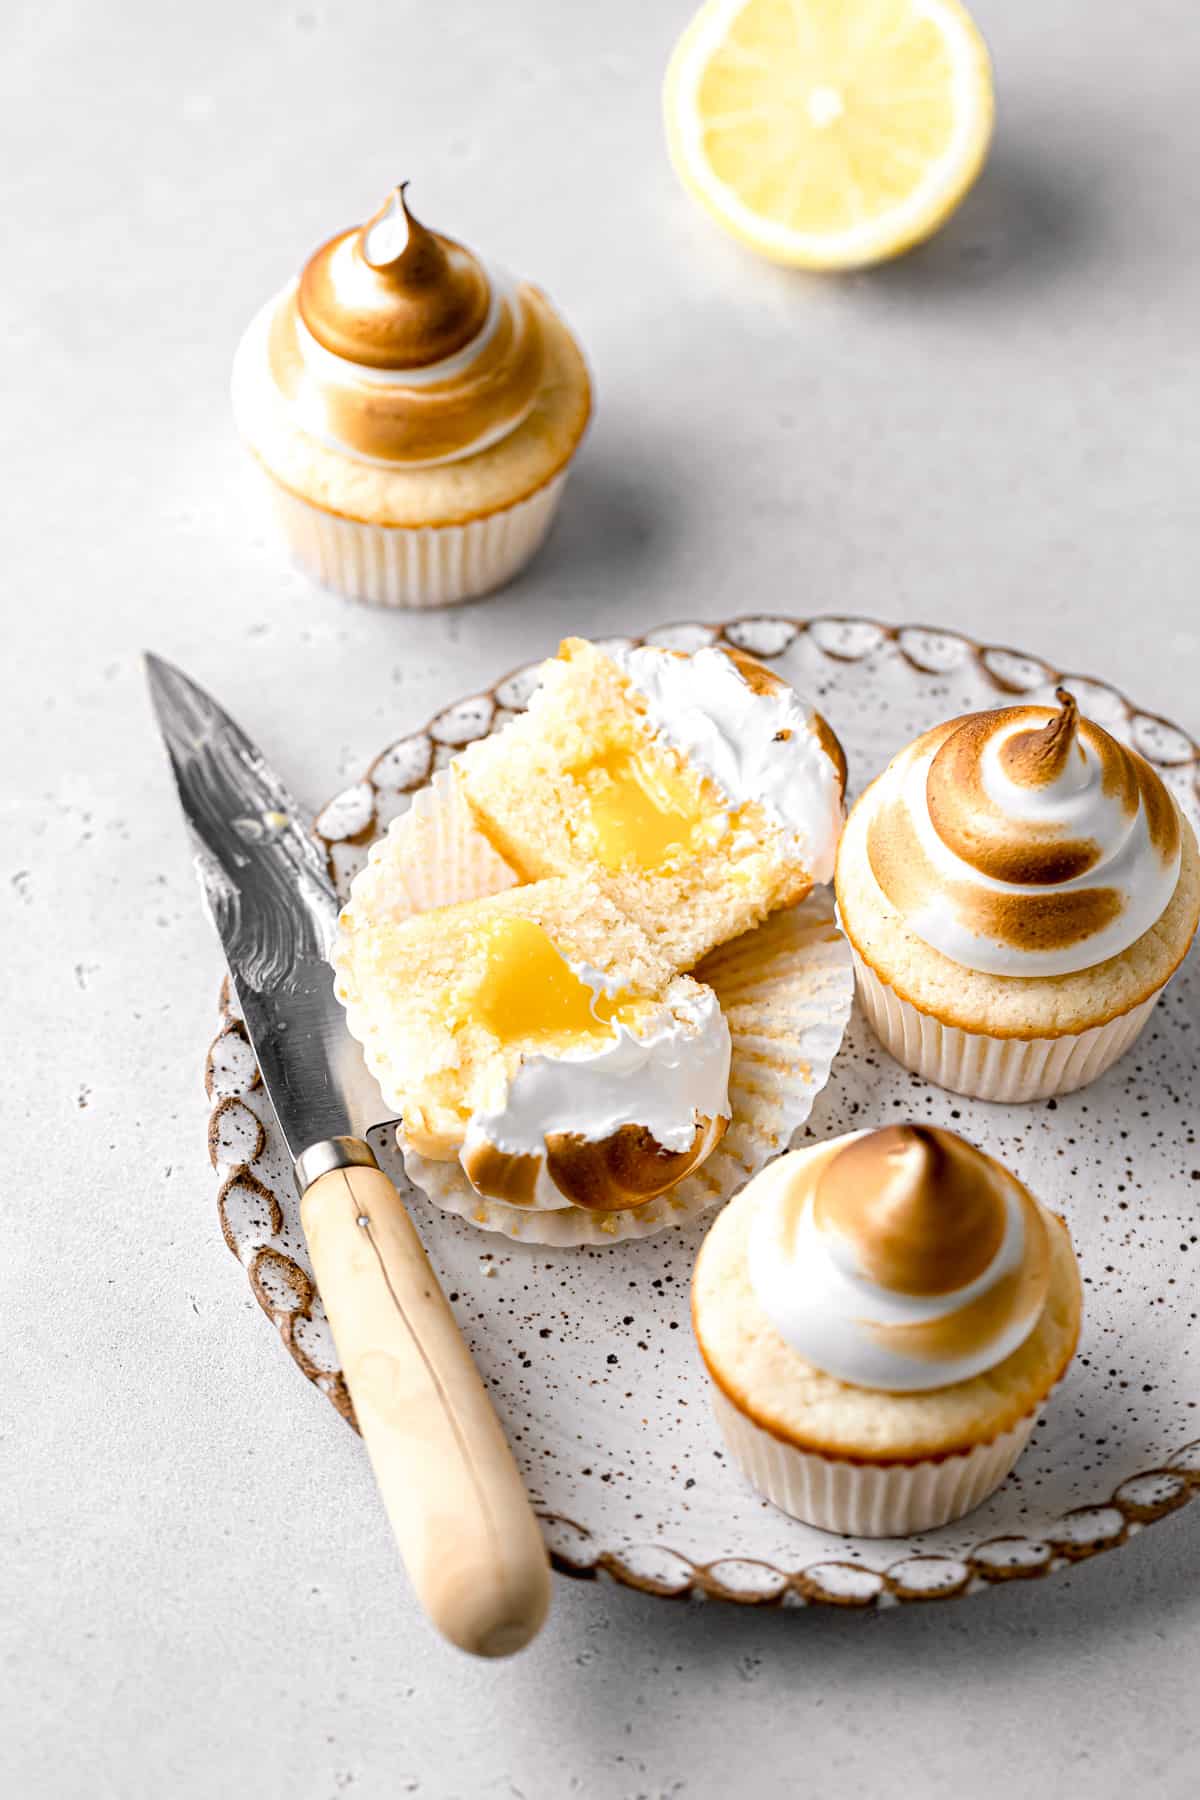 lemon meringue cupcakes on plate with one cut in half.